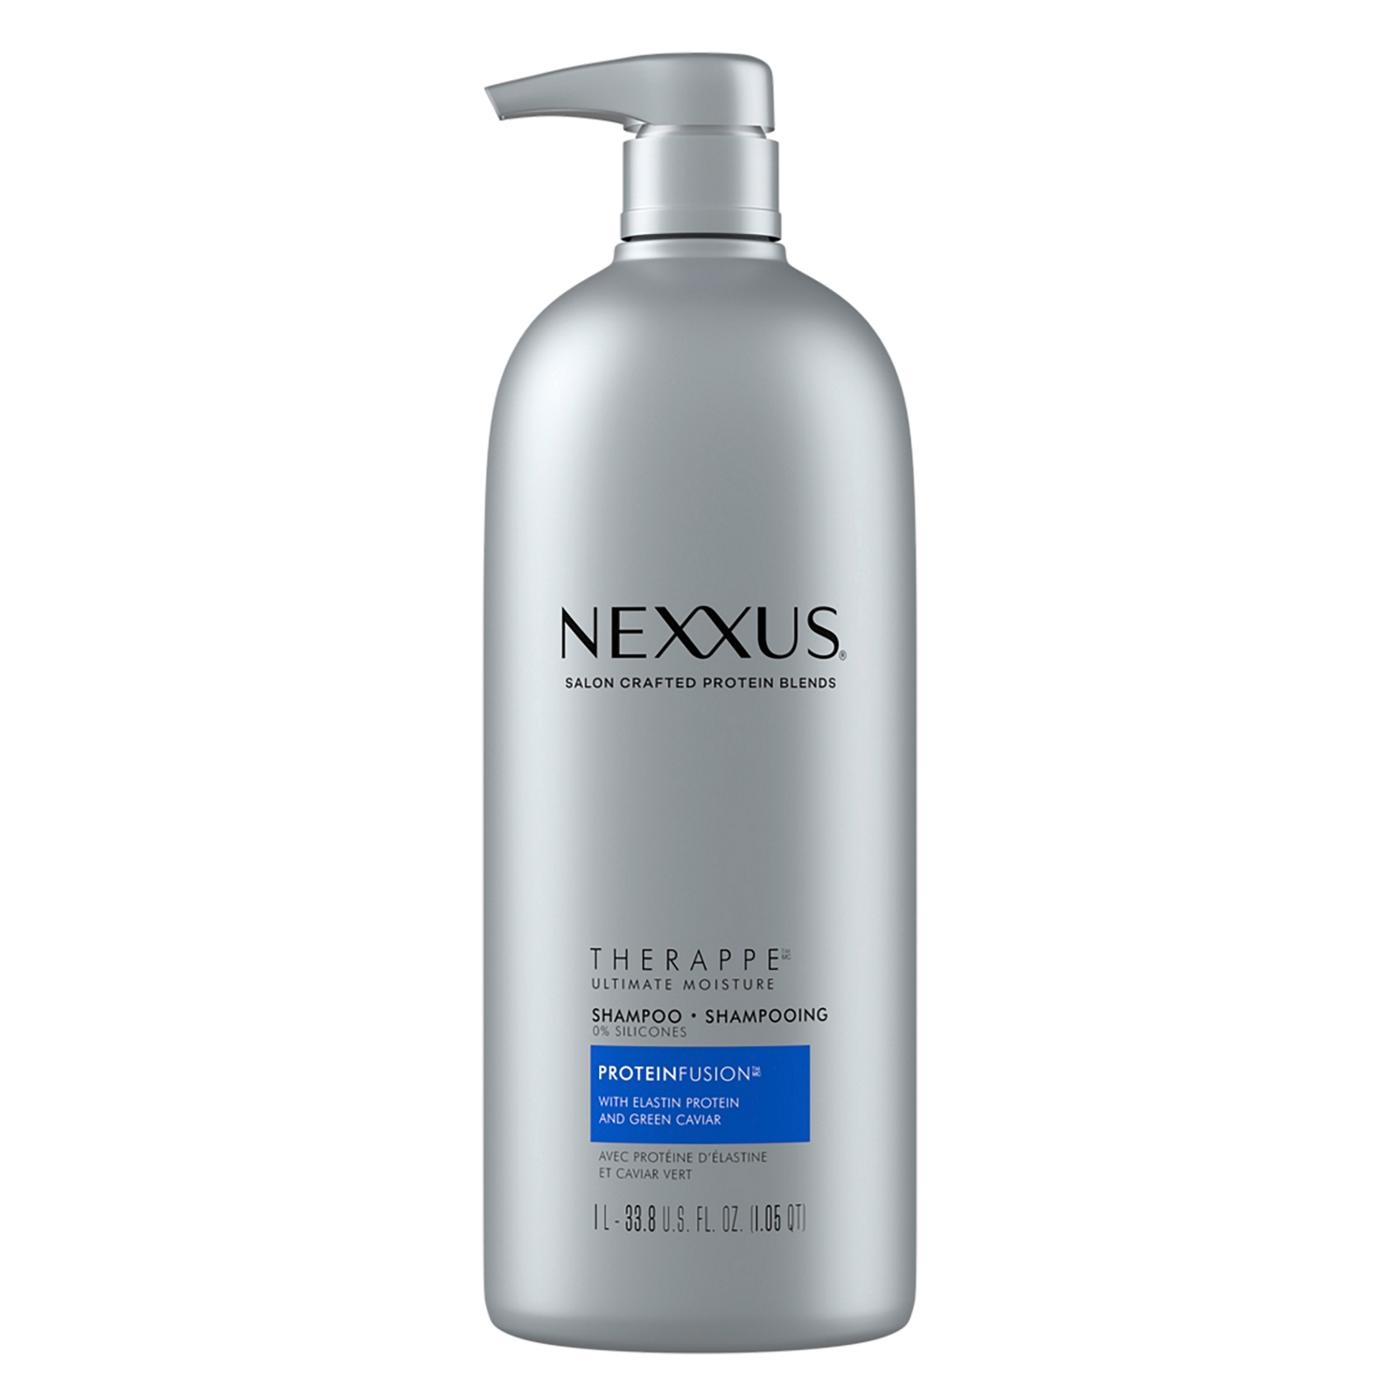 Nexxus Therappe Ultimate Moisture Shampoo; image 1 of 9